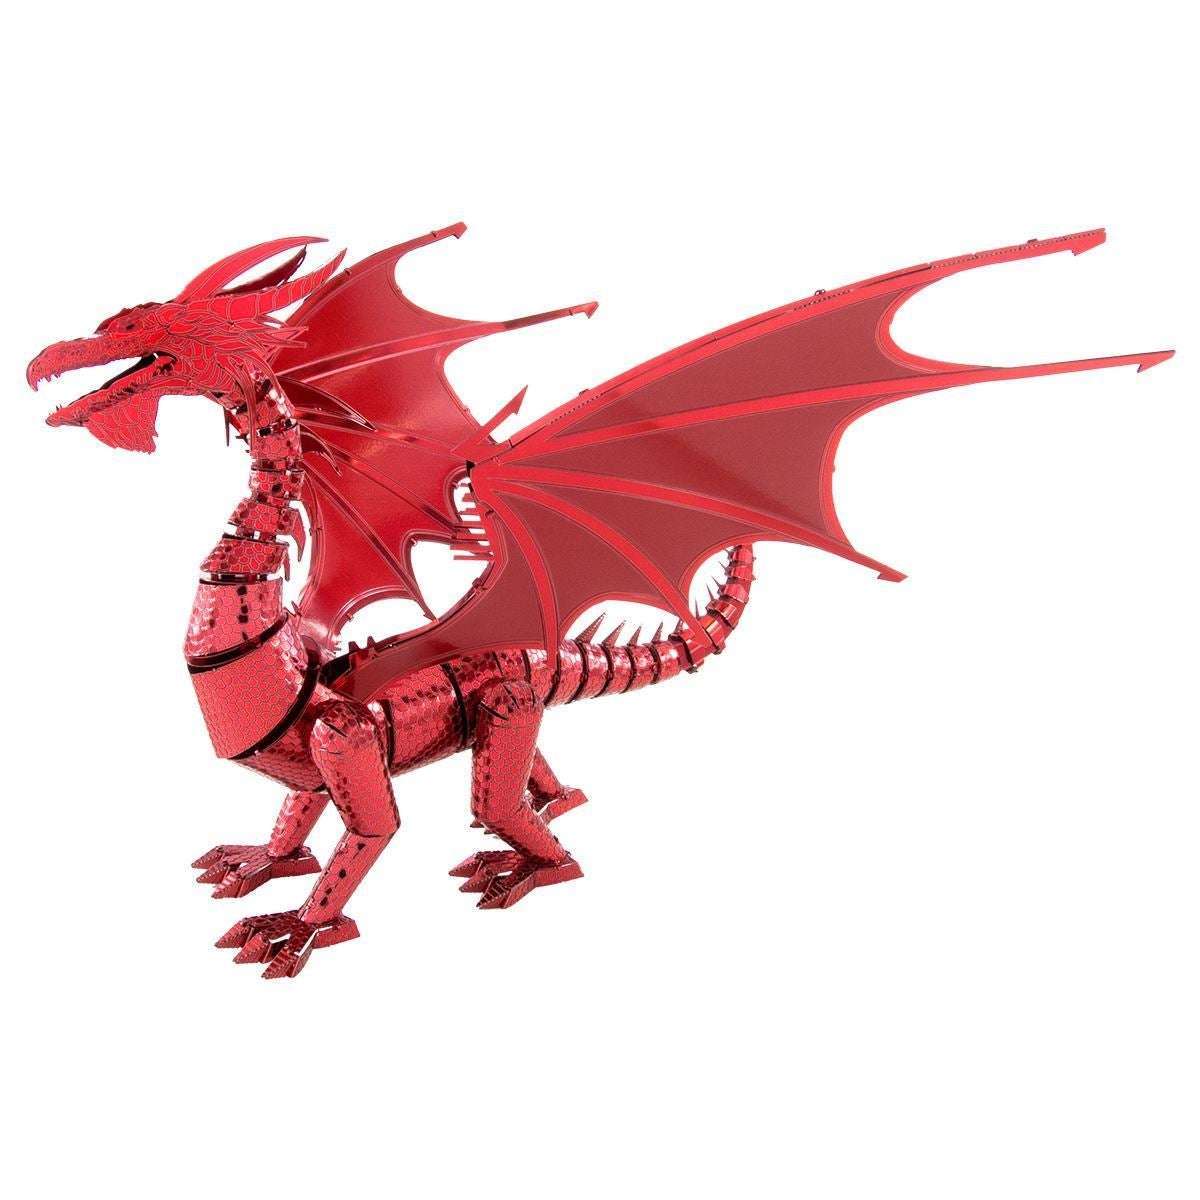 Red Dragon 3D Laser Cut Model Kit